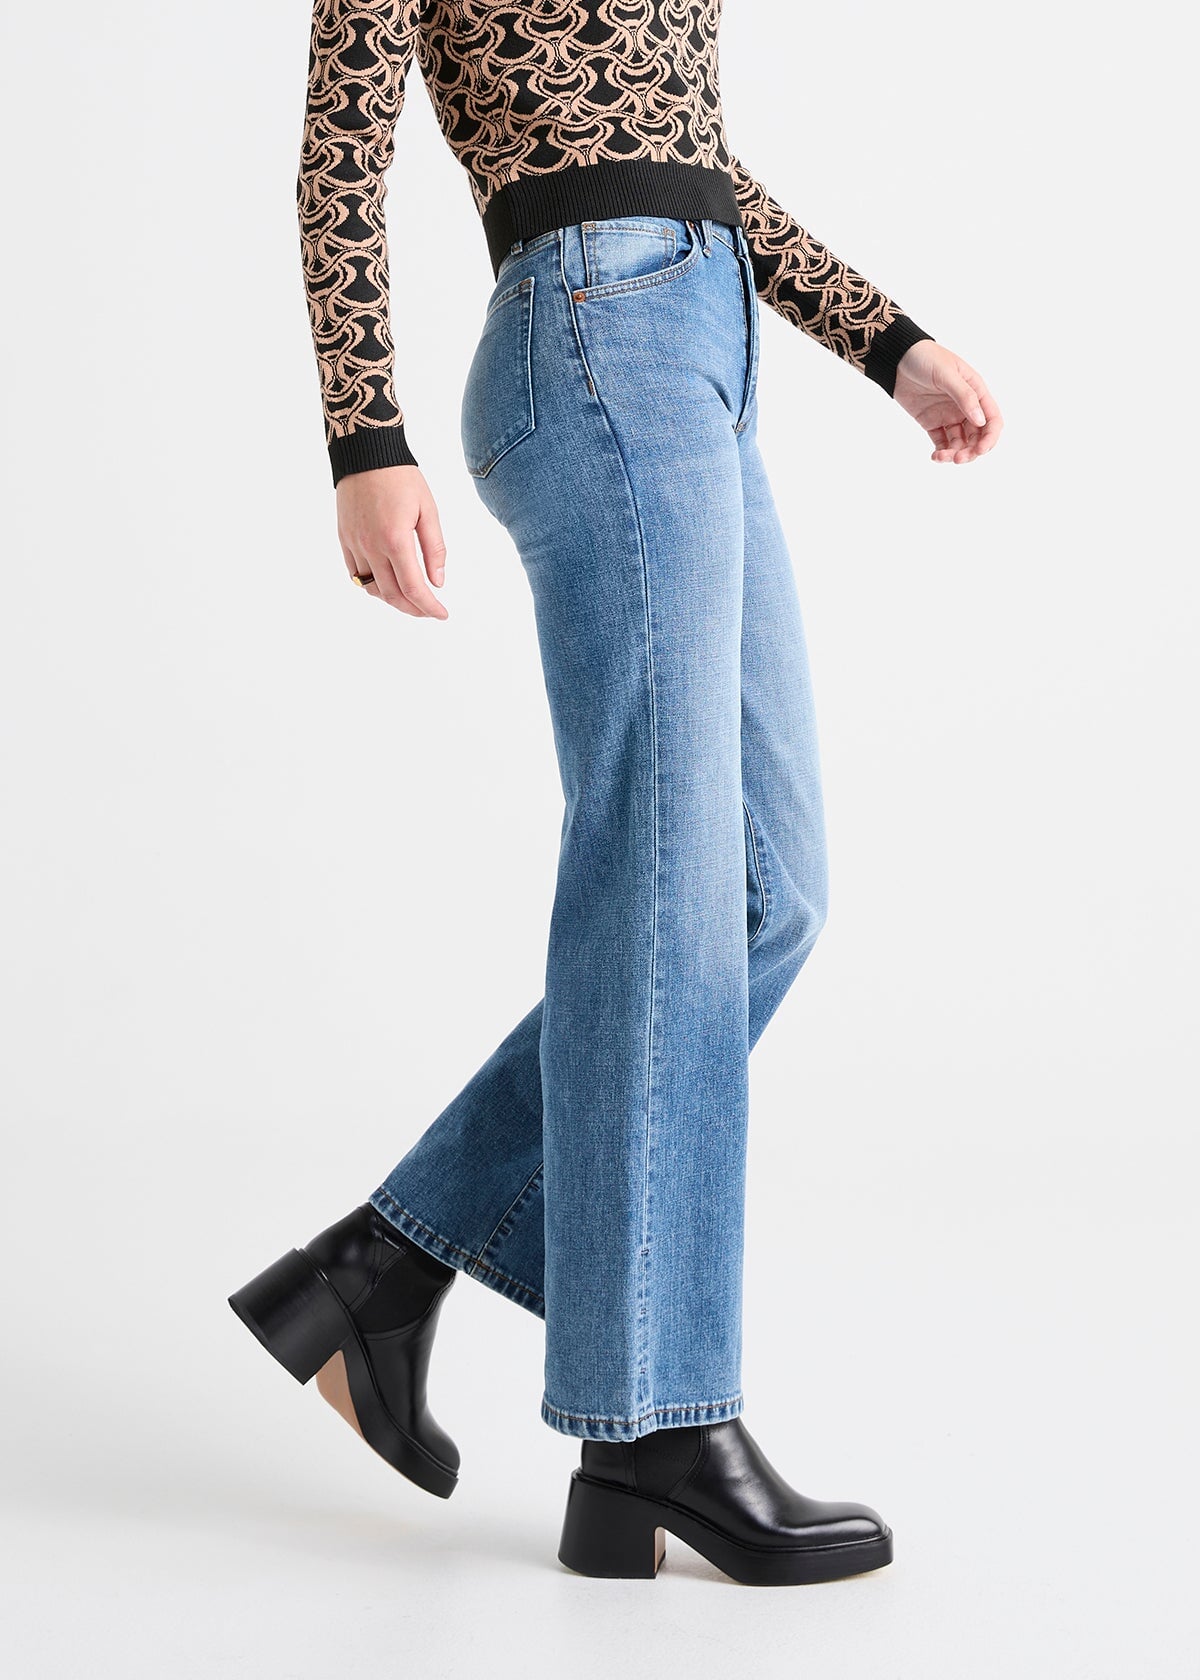 Bell-bottom jeans Flare jeans Wide-leg denim Women's retro jeans Vintage-inspired  pants 70s style